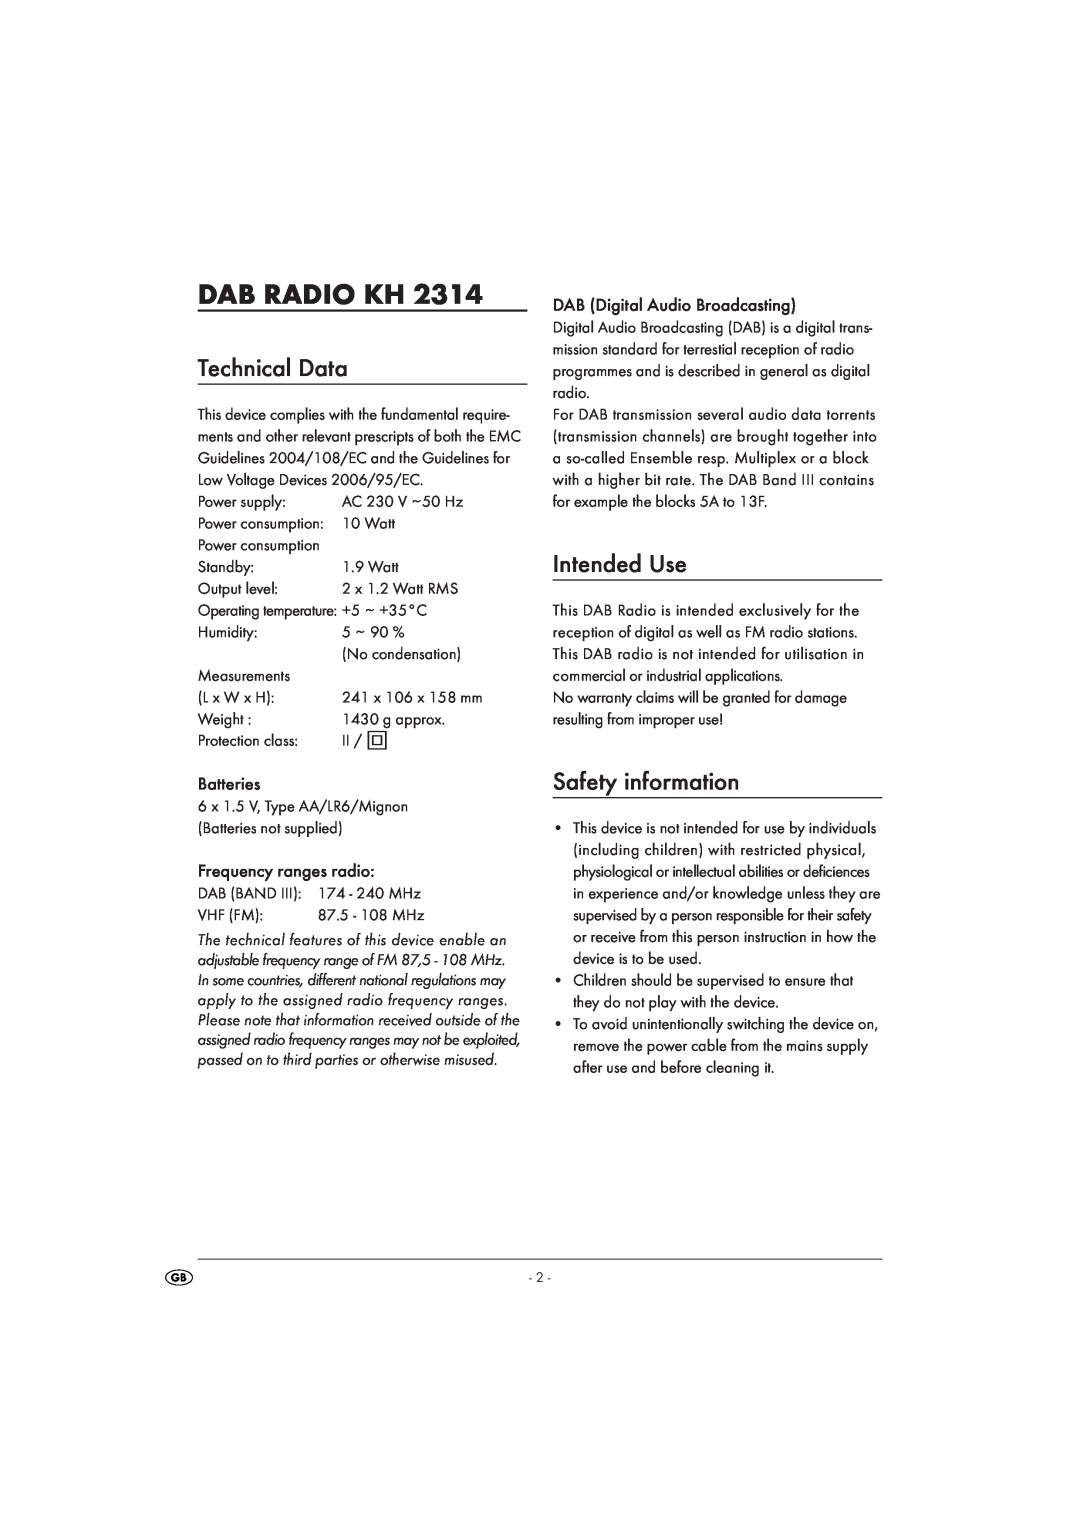 Kompernass KH 2314 manual Dab Radio Kh, Technical Data, Intended Use, Safety information 